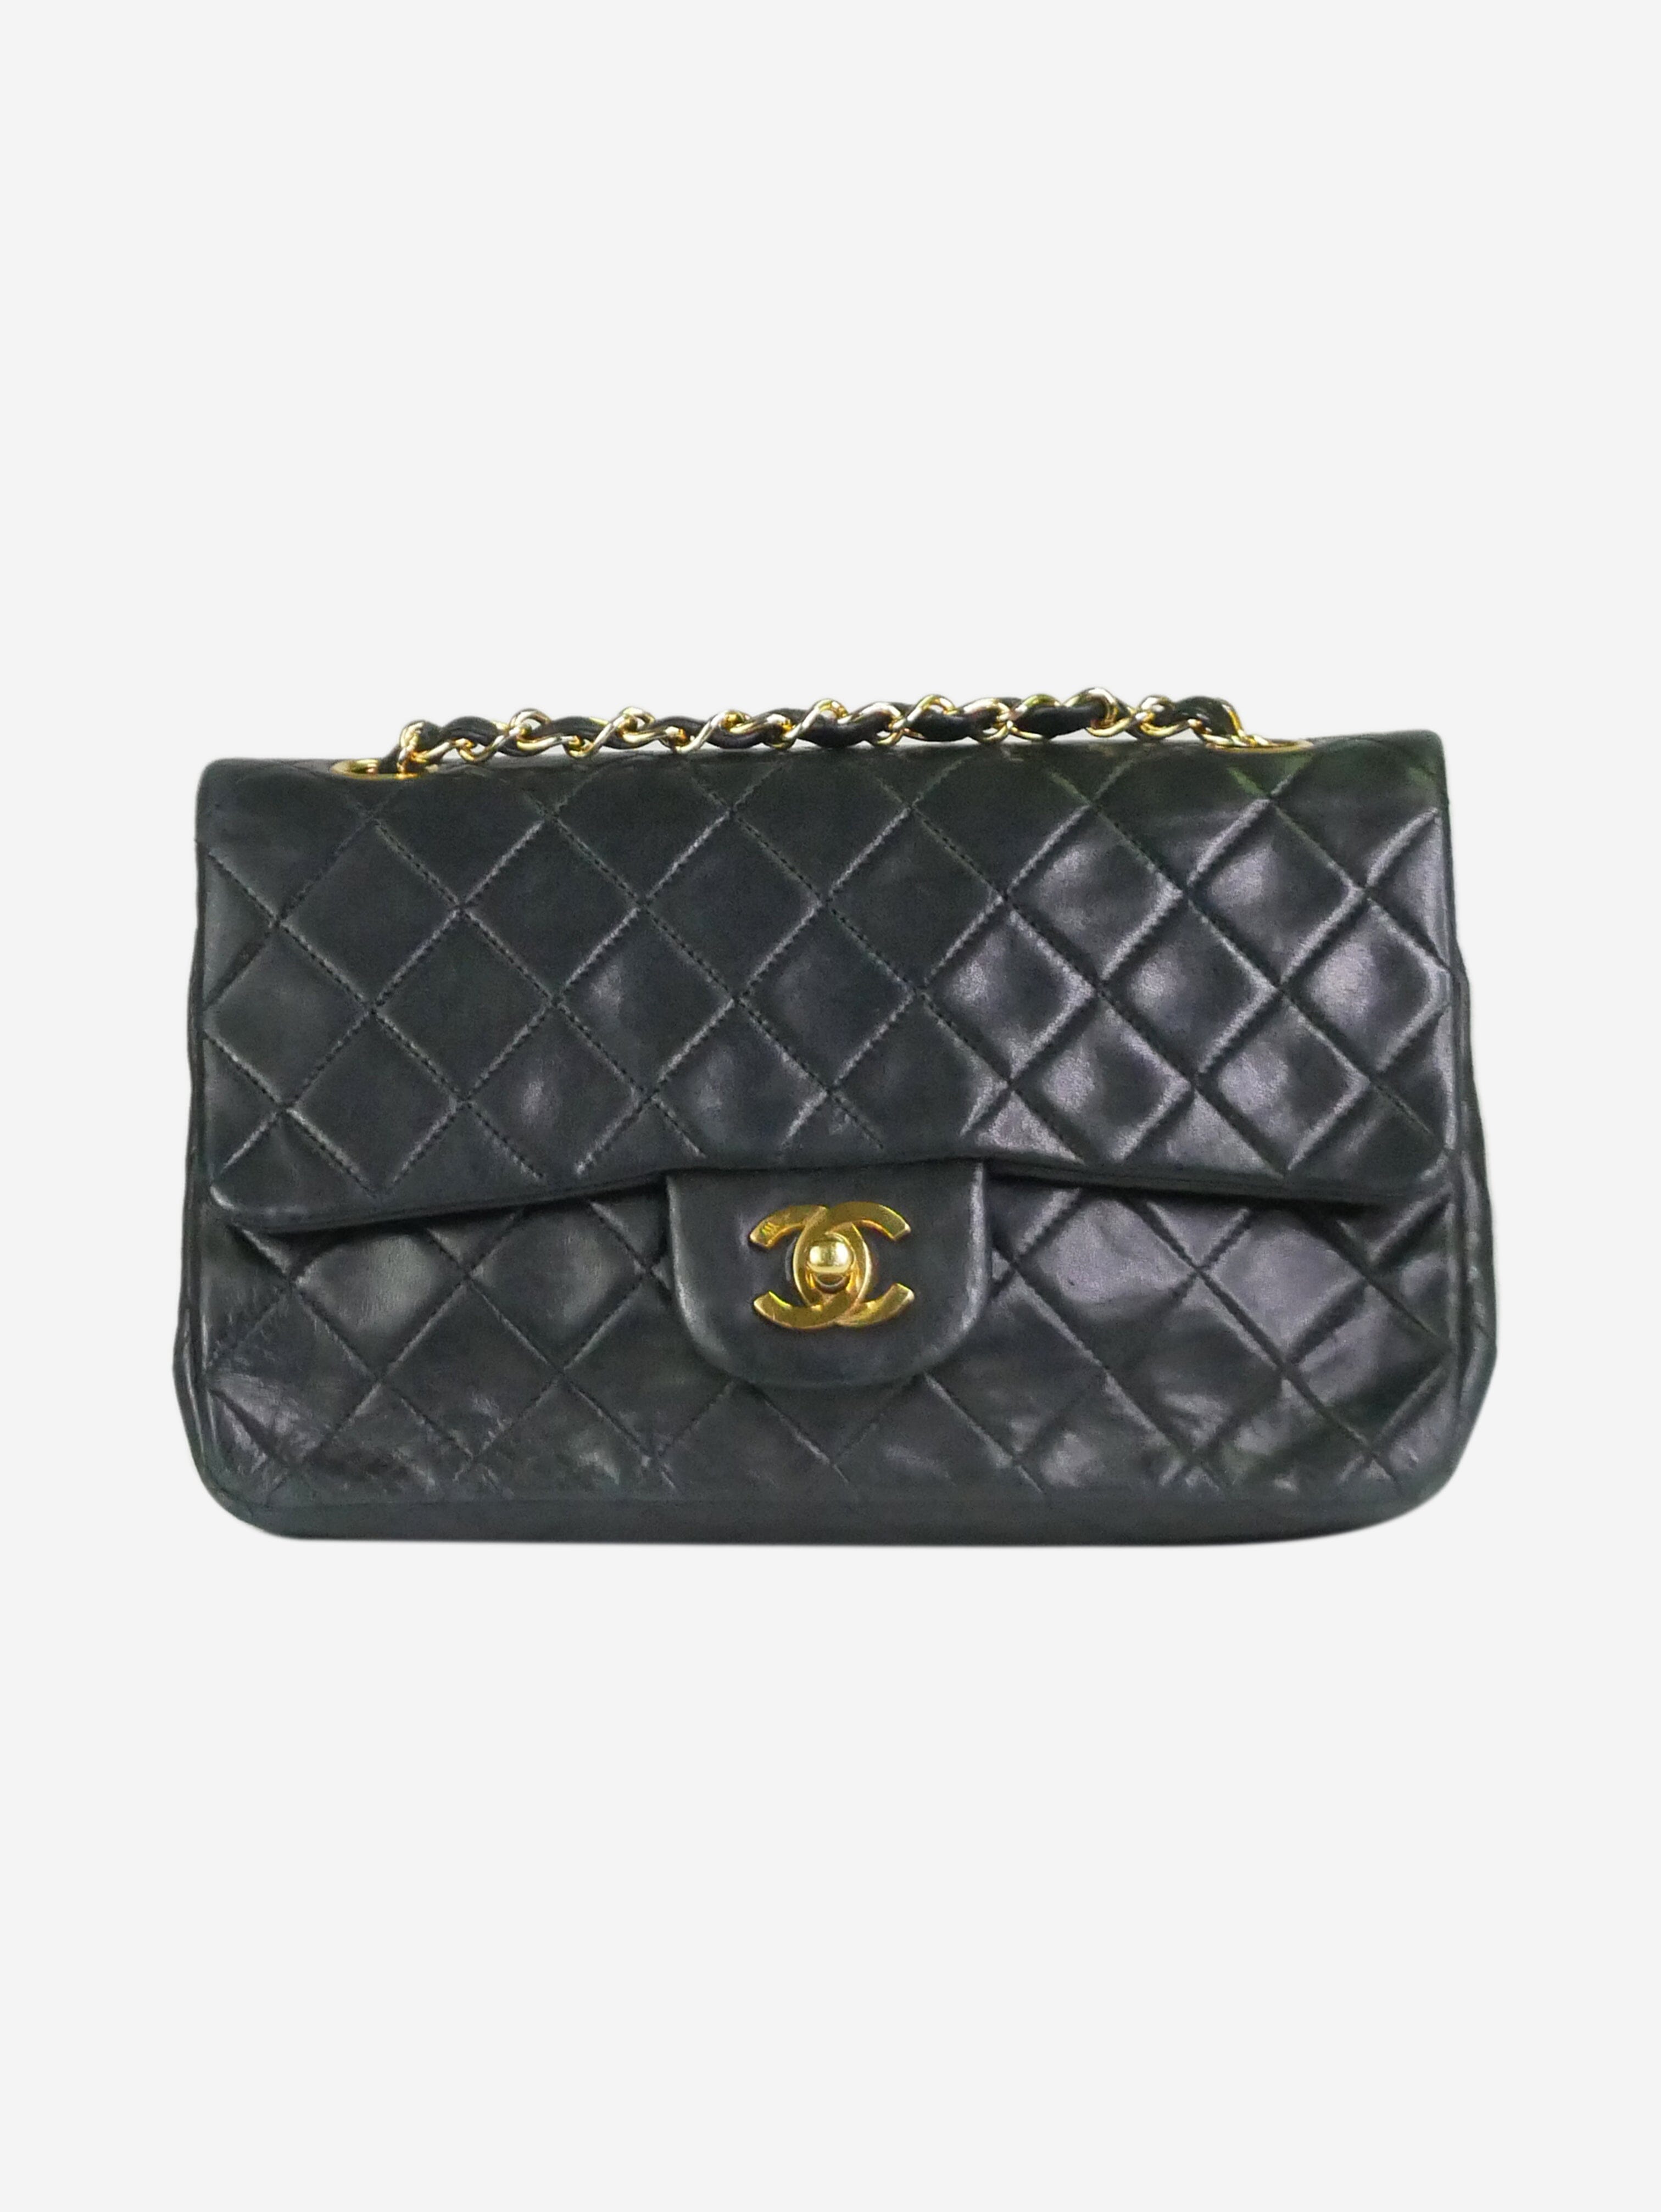 Chanel - Authenticated Timeless/Classique Handbag - Silk Black Plain for Women, Very Good Condition